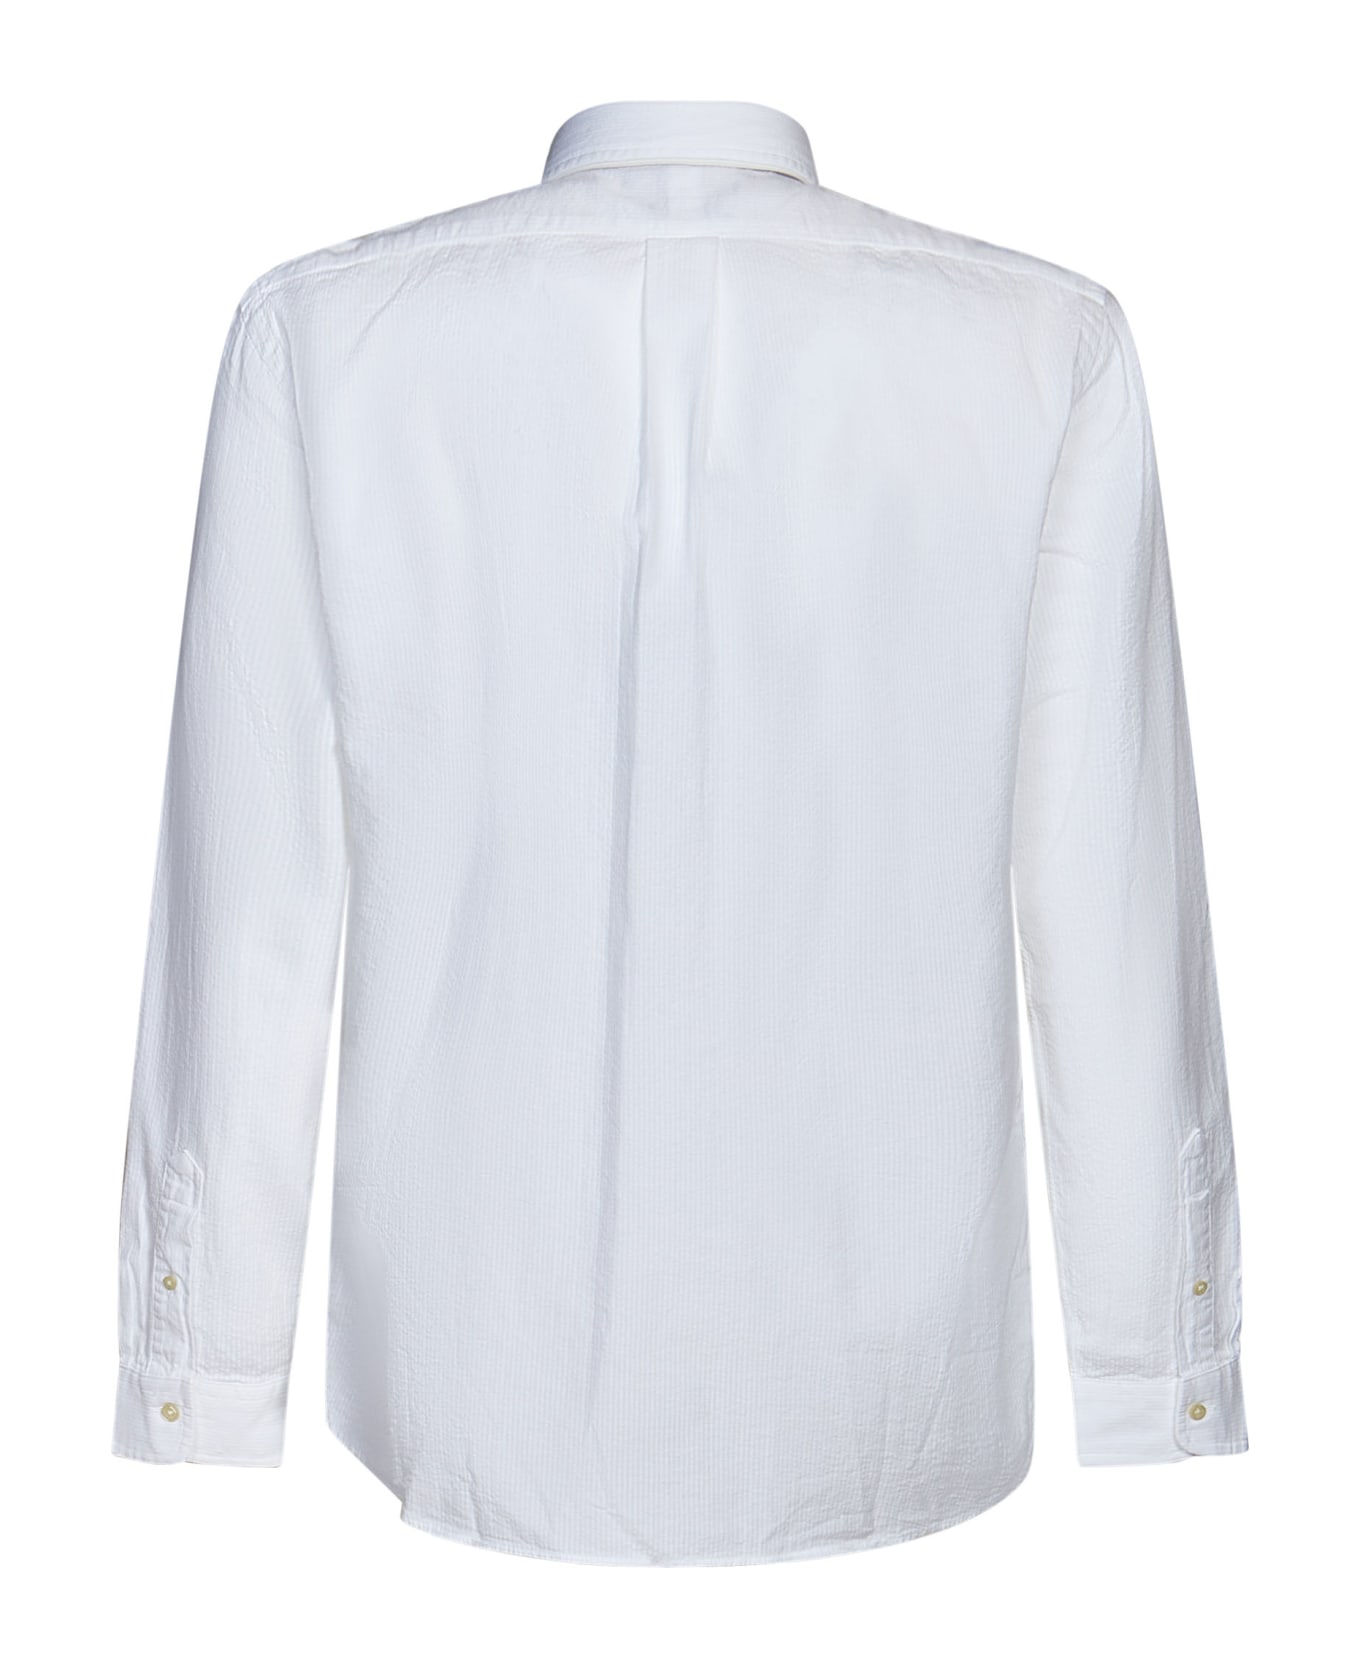 Polo Ralph Lauren Shirt Polo Ralph Lauren - WHITE シャツ